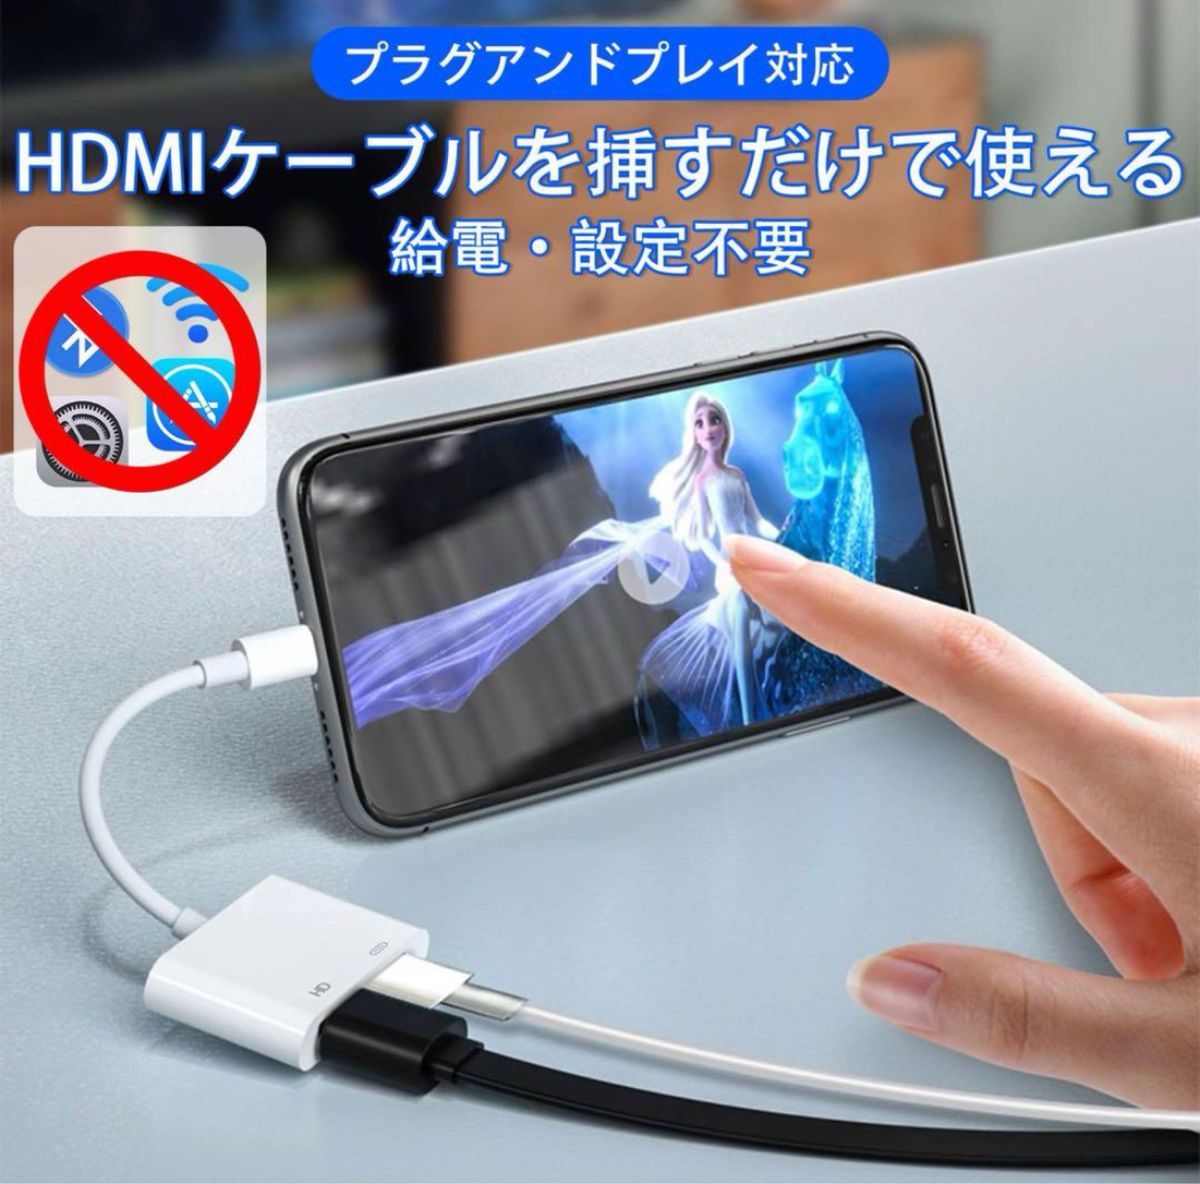 iphone hdmi 変換ケーブルlightning HDMI 変換アダプタ iPhone ケーブル HDMI ライトニング